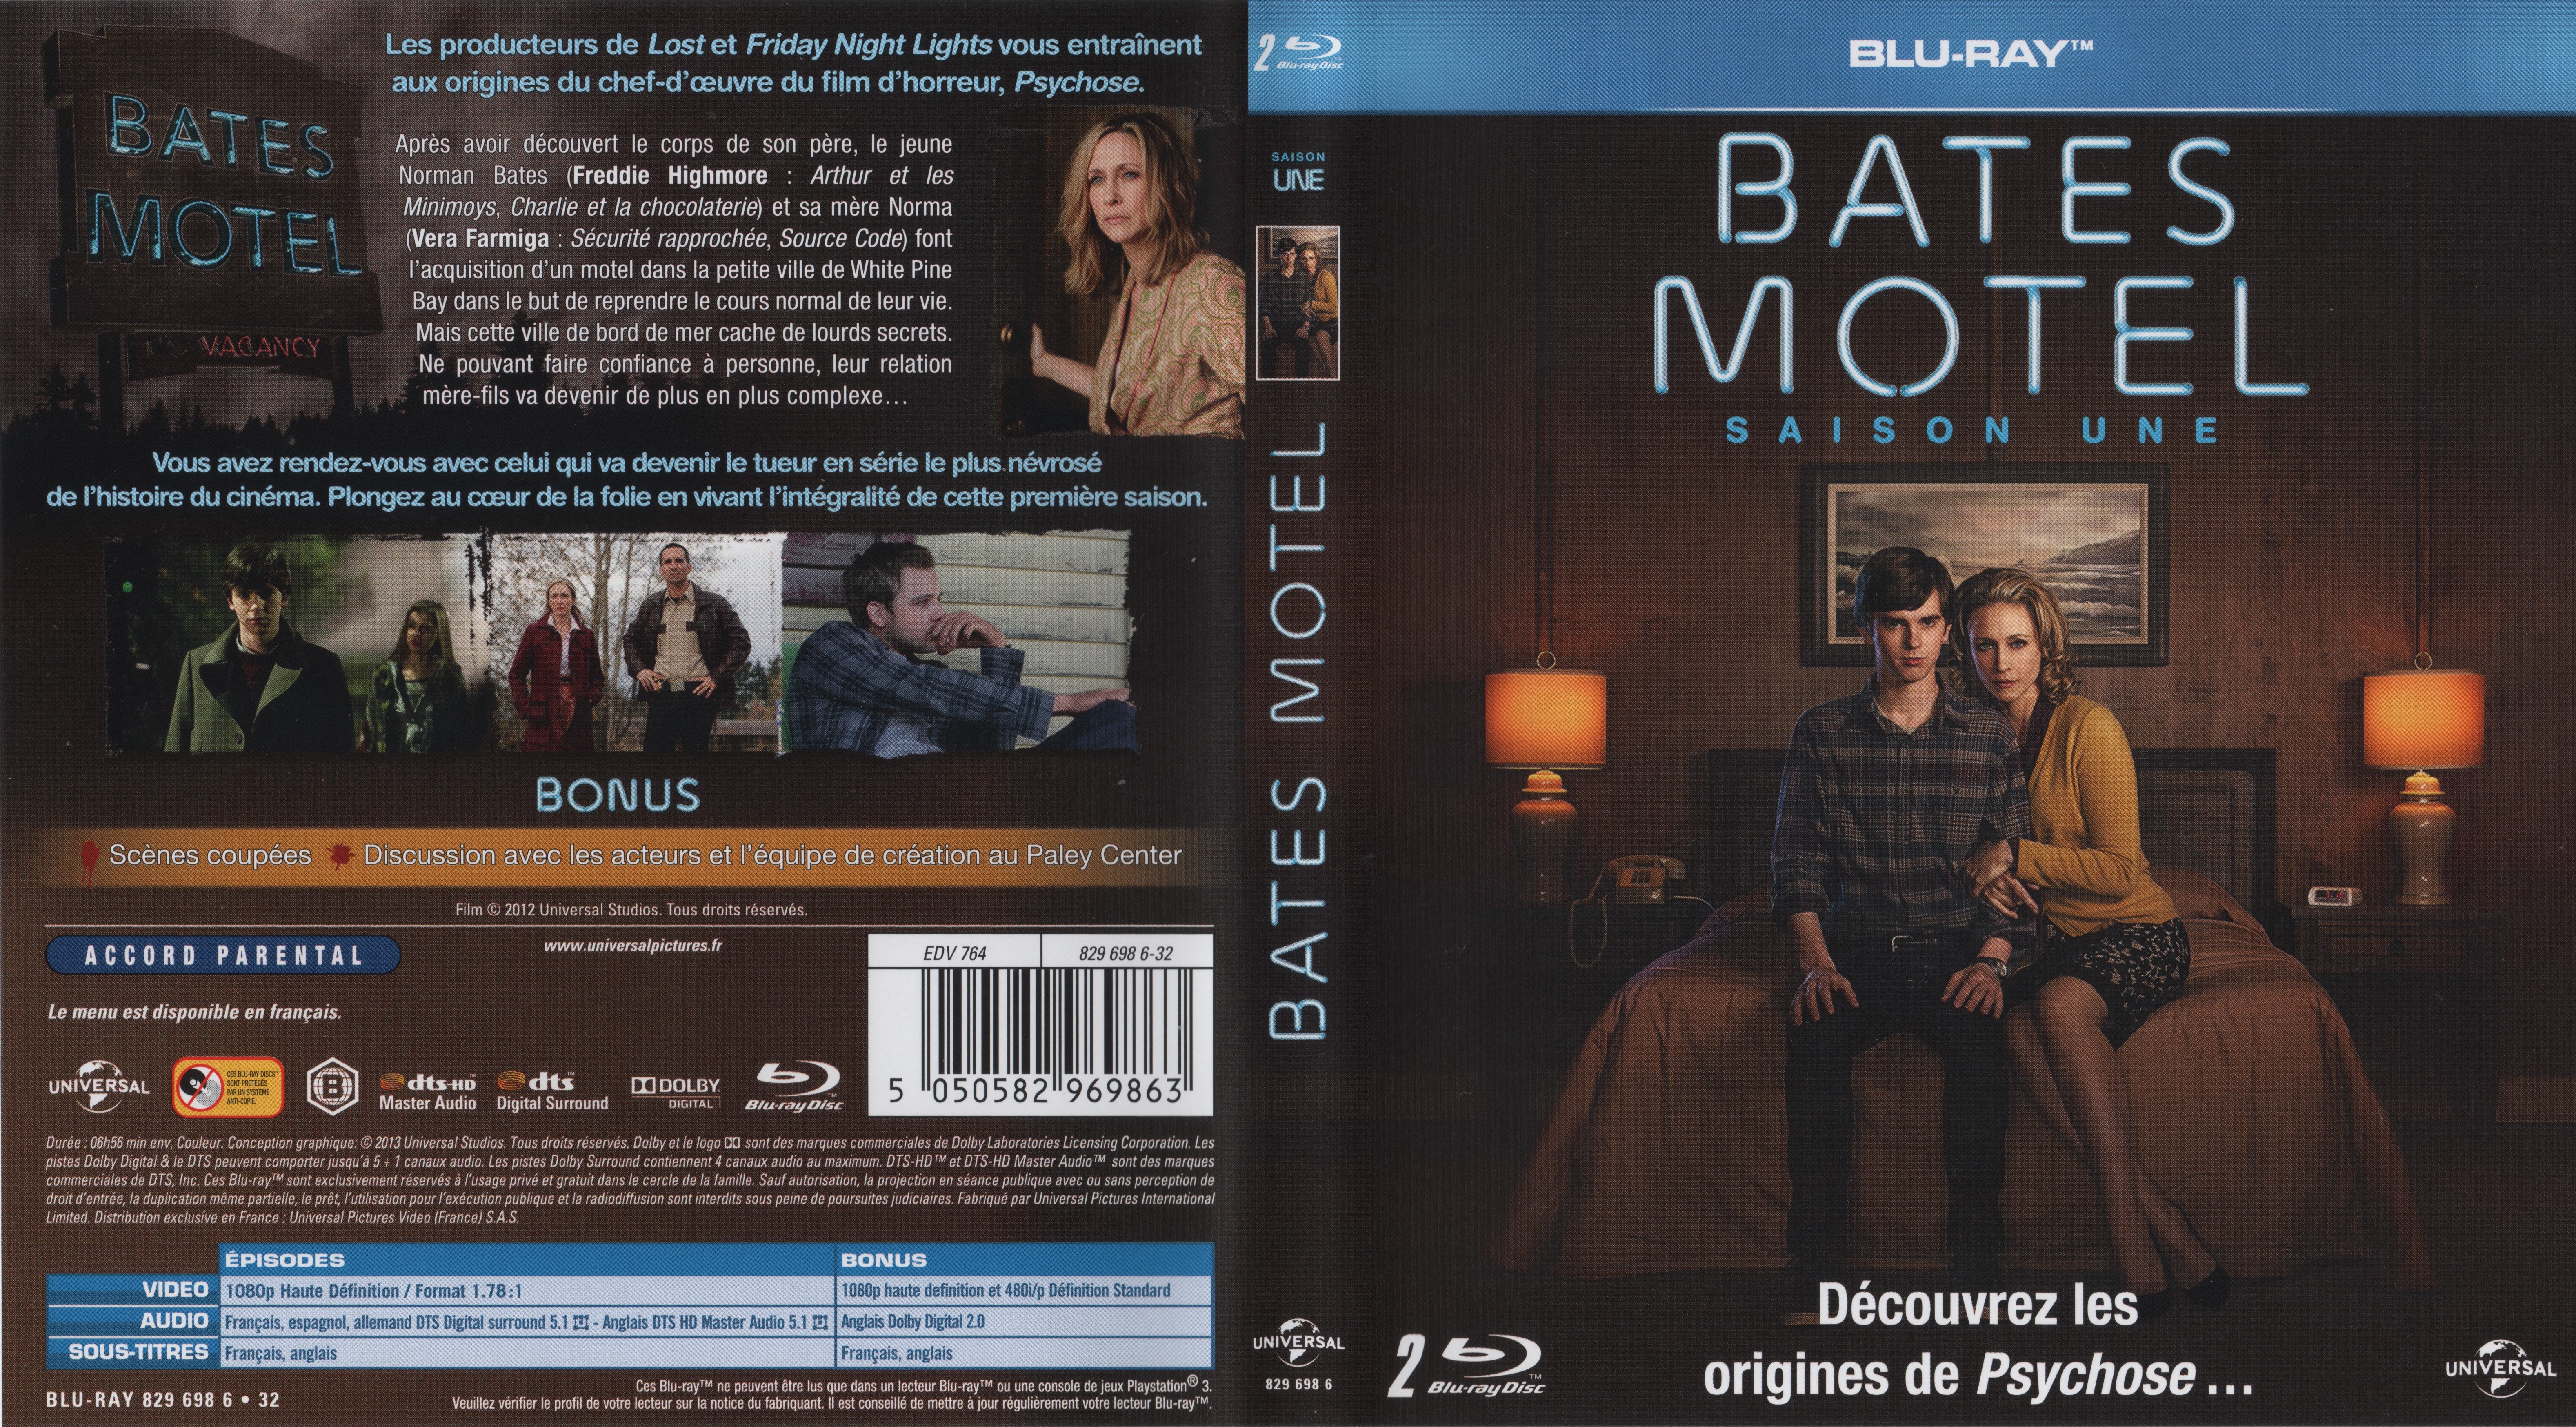 Jaquette DVD Bates motel Saison 1 (BLU-RAY)